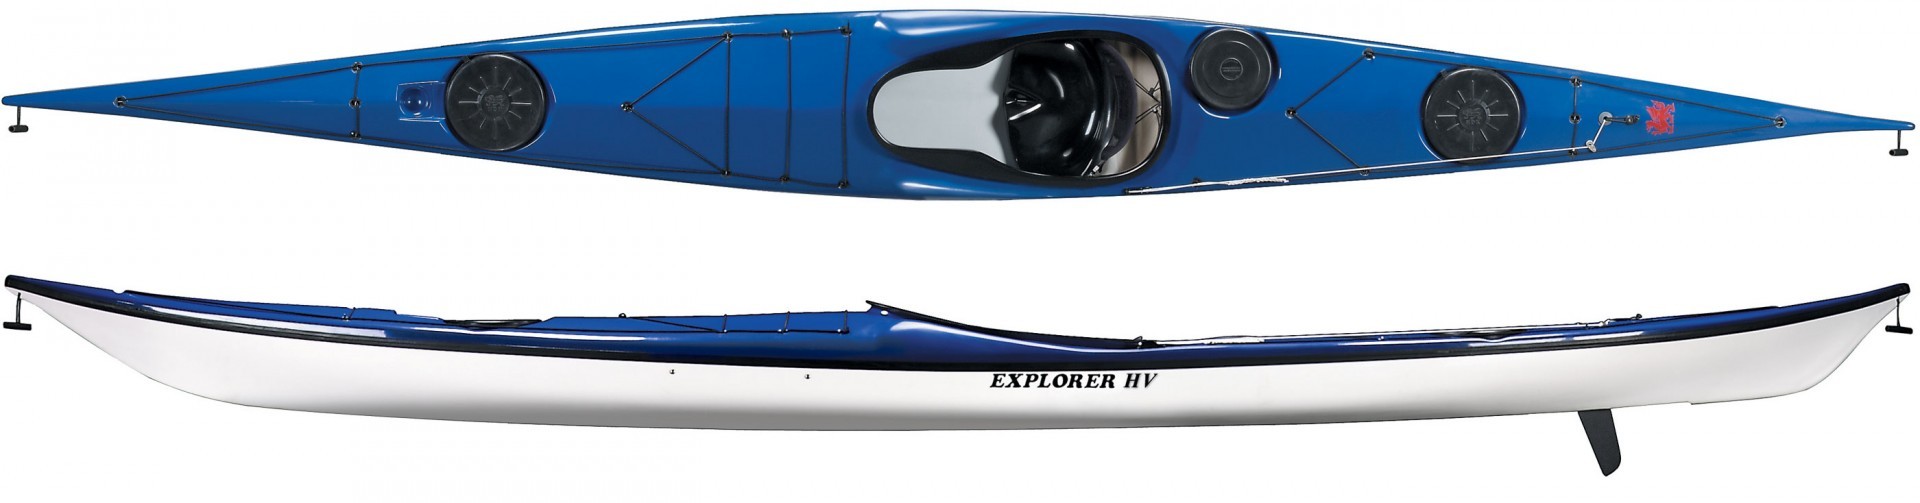 NDK Explorer High Volume Sea kayak top and side views